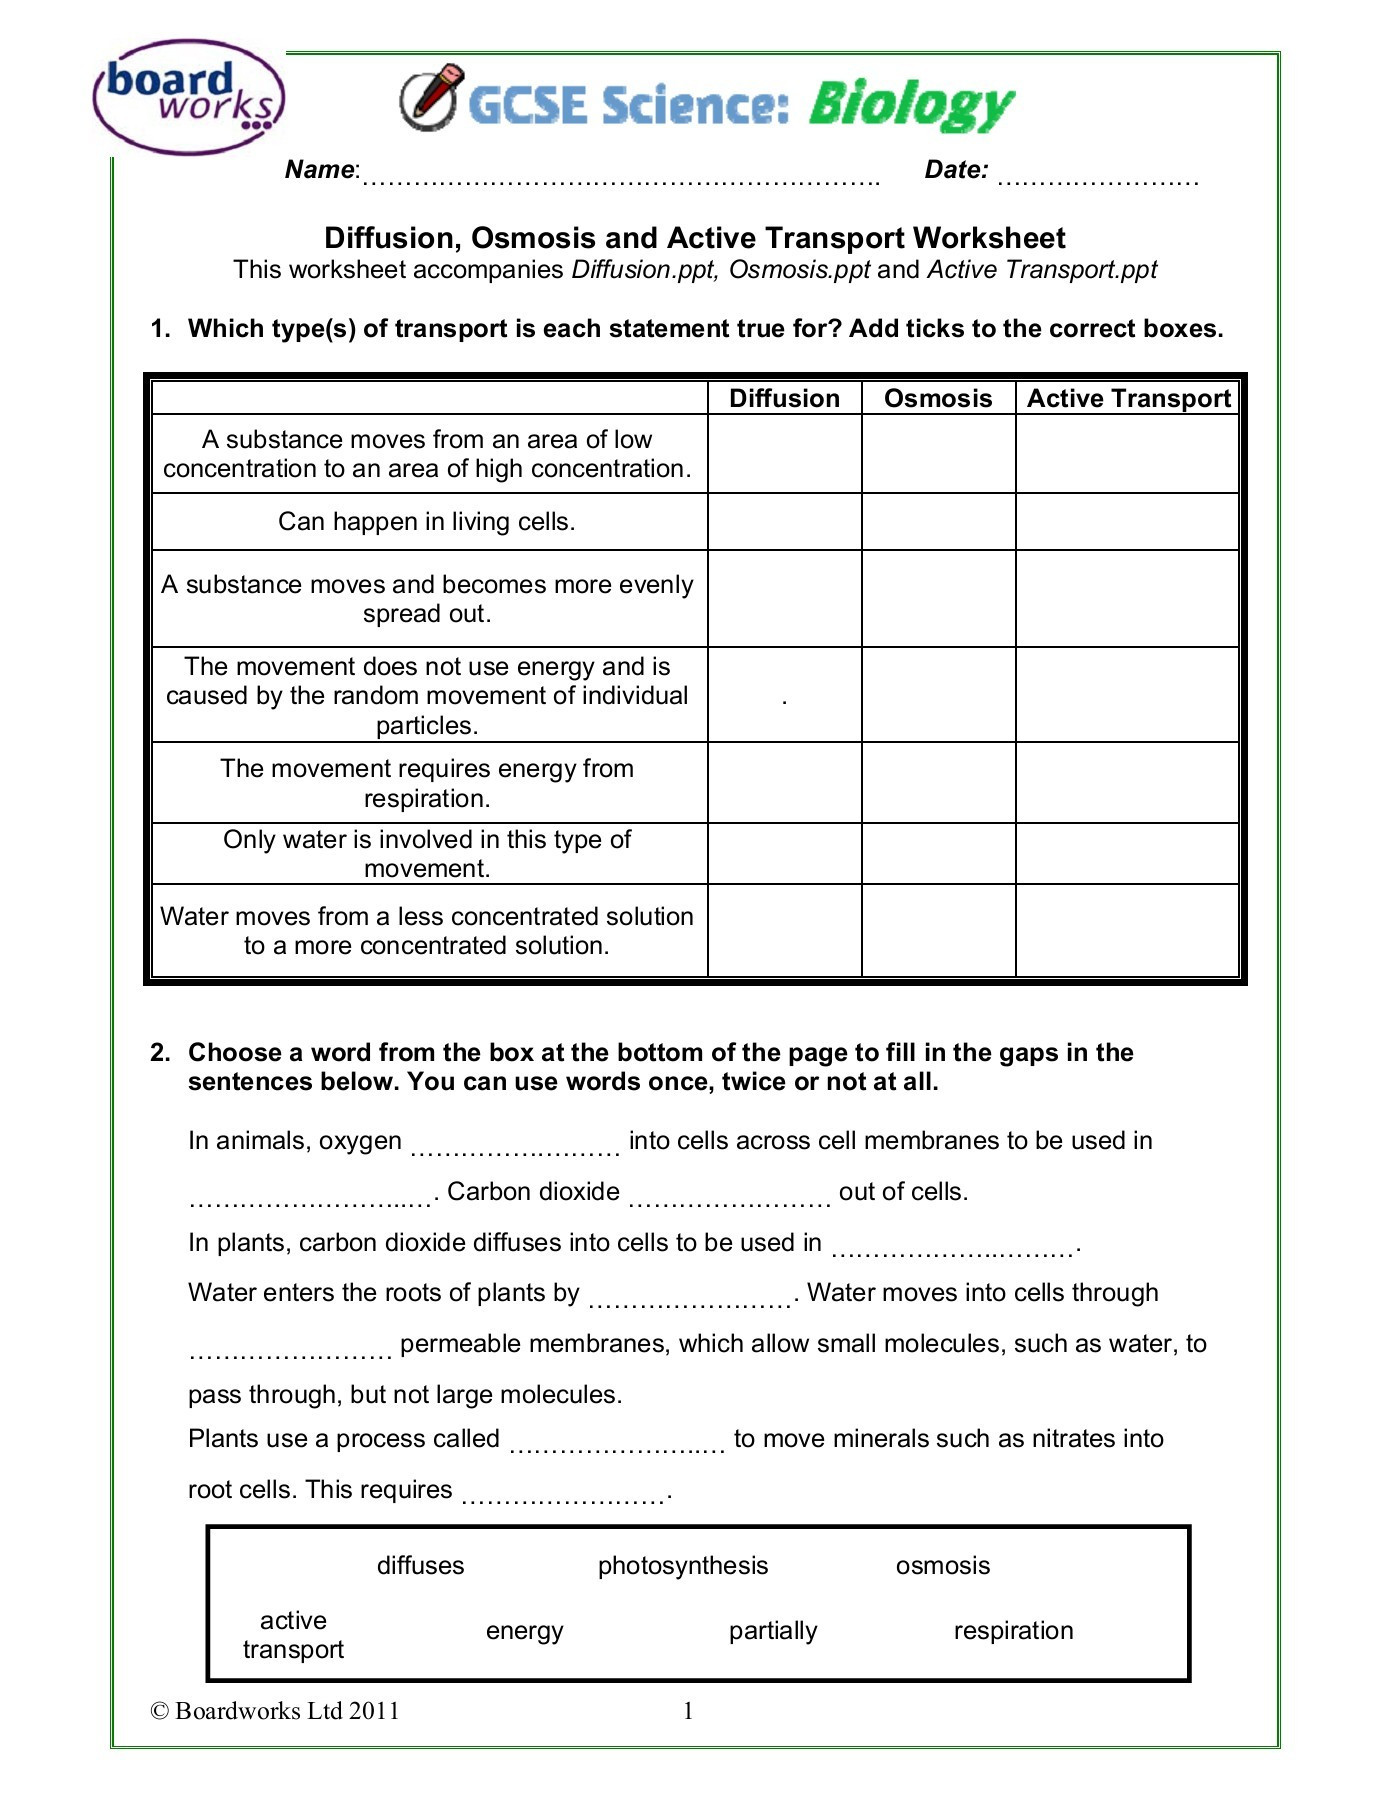 Diffusion and Osmosis Worksheet Diffusion Osmosis and Active Transport Worksheet Pages 1 4